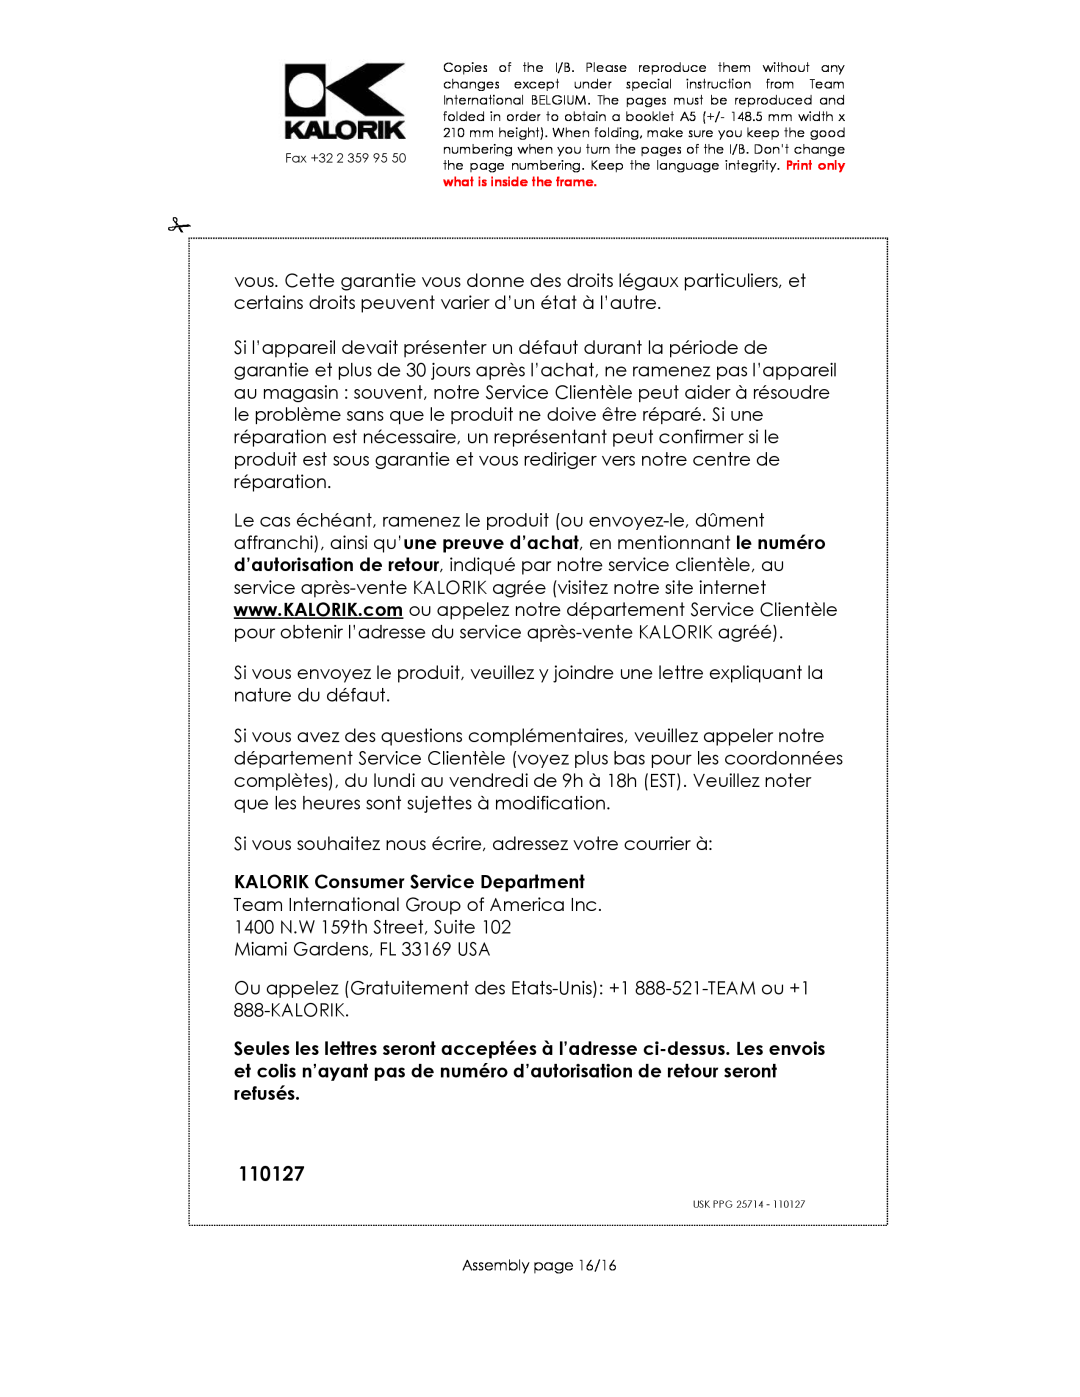 Kalorik USK PPG 25714 manual 110127, KALORIK Consumer Service Department, Assembly page 16/16 